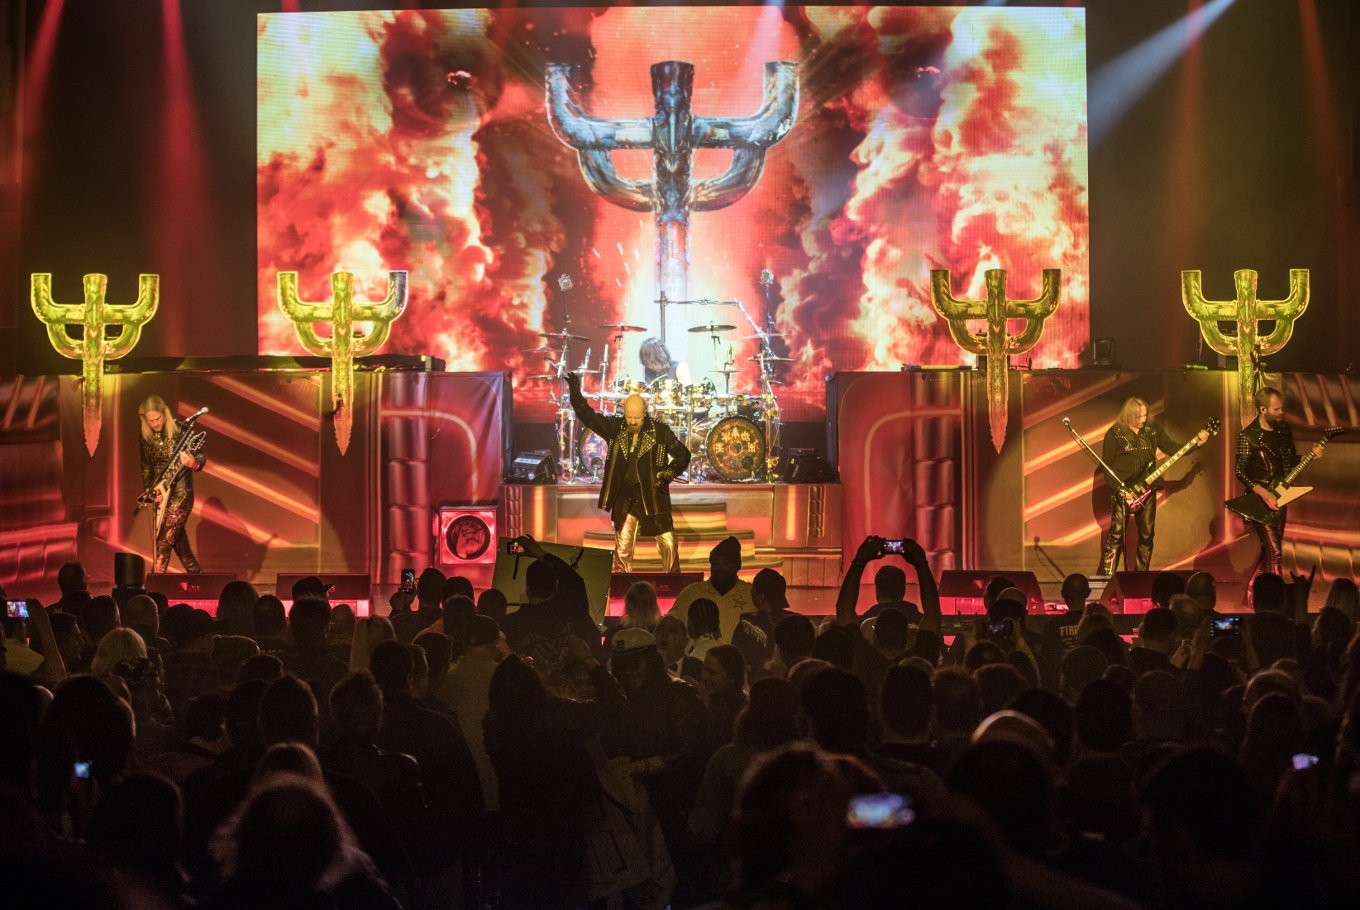 Judas Priest to rock Indonesian fans in December ... - 1360 x 910 jpeg 241kB